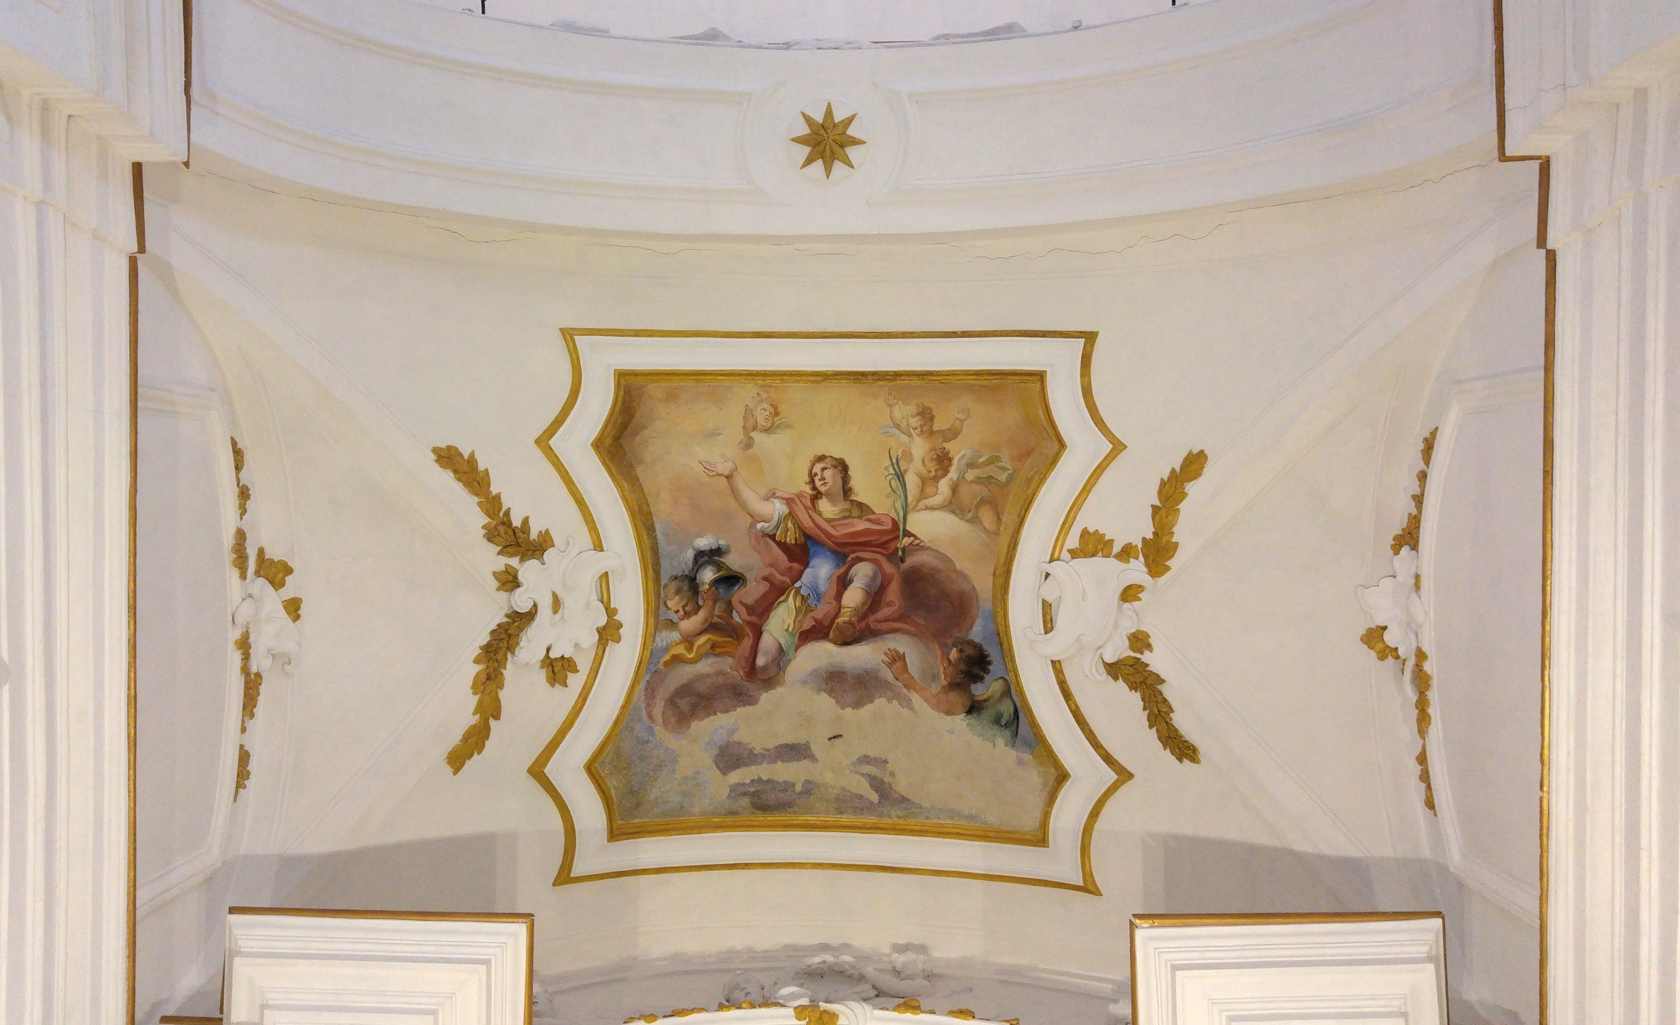 Oratorio de San Mercurio - fresco de San Mercurio en la gloria del Cielo